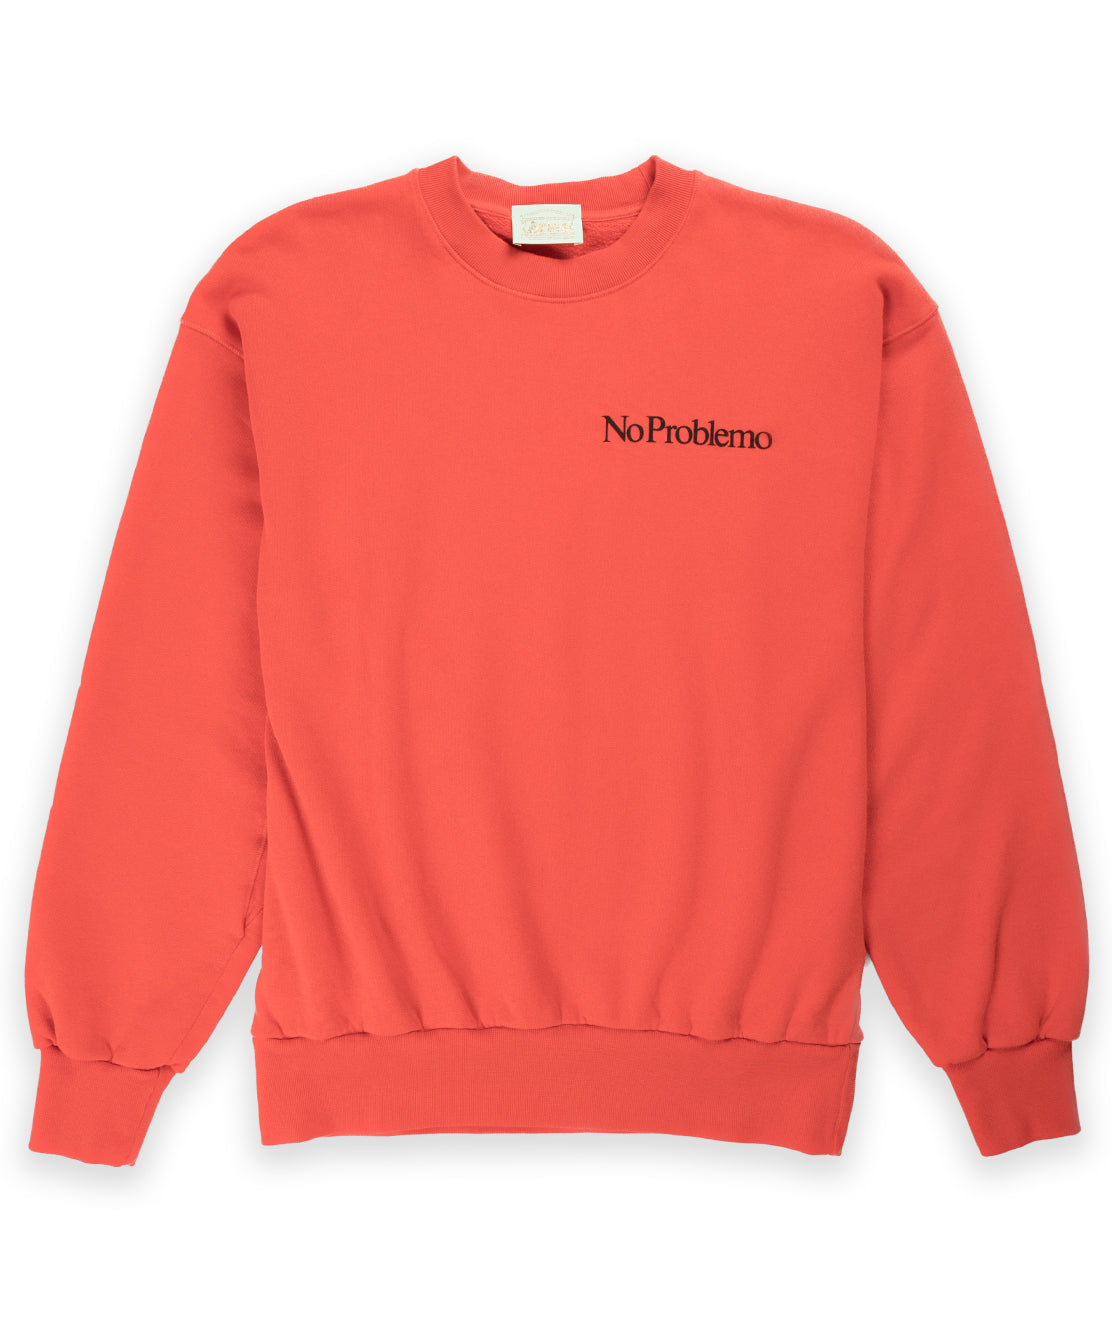 Mini Problemo Sweatshirt - Red